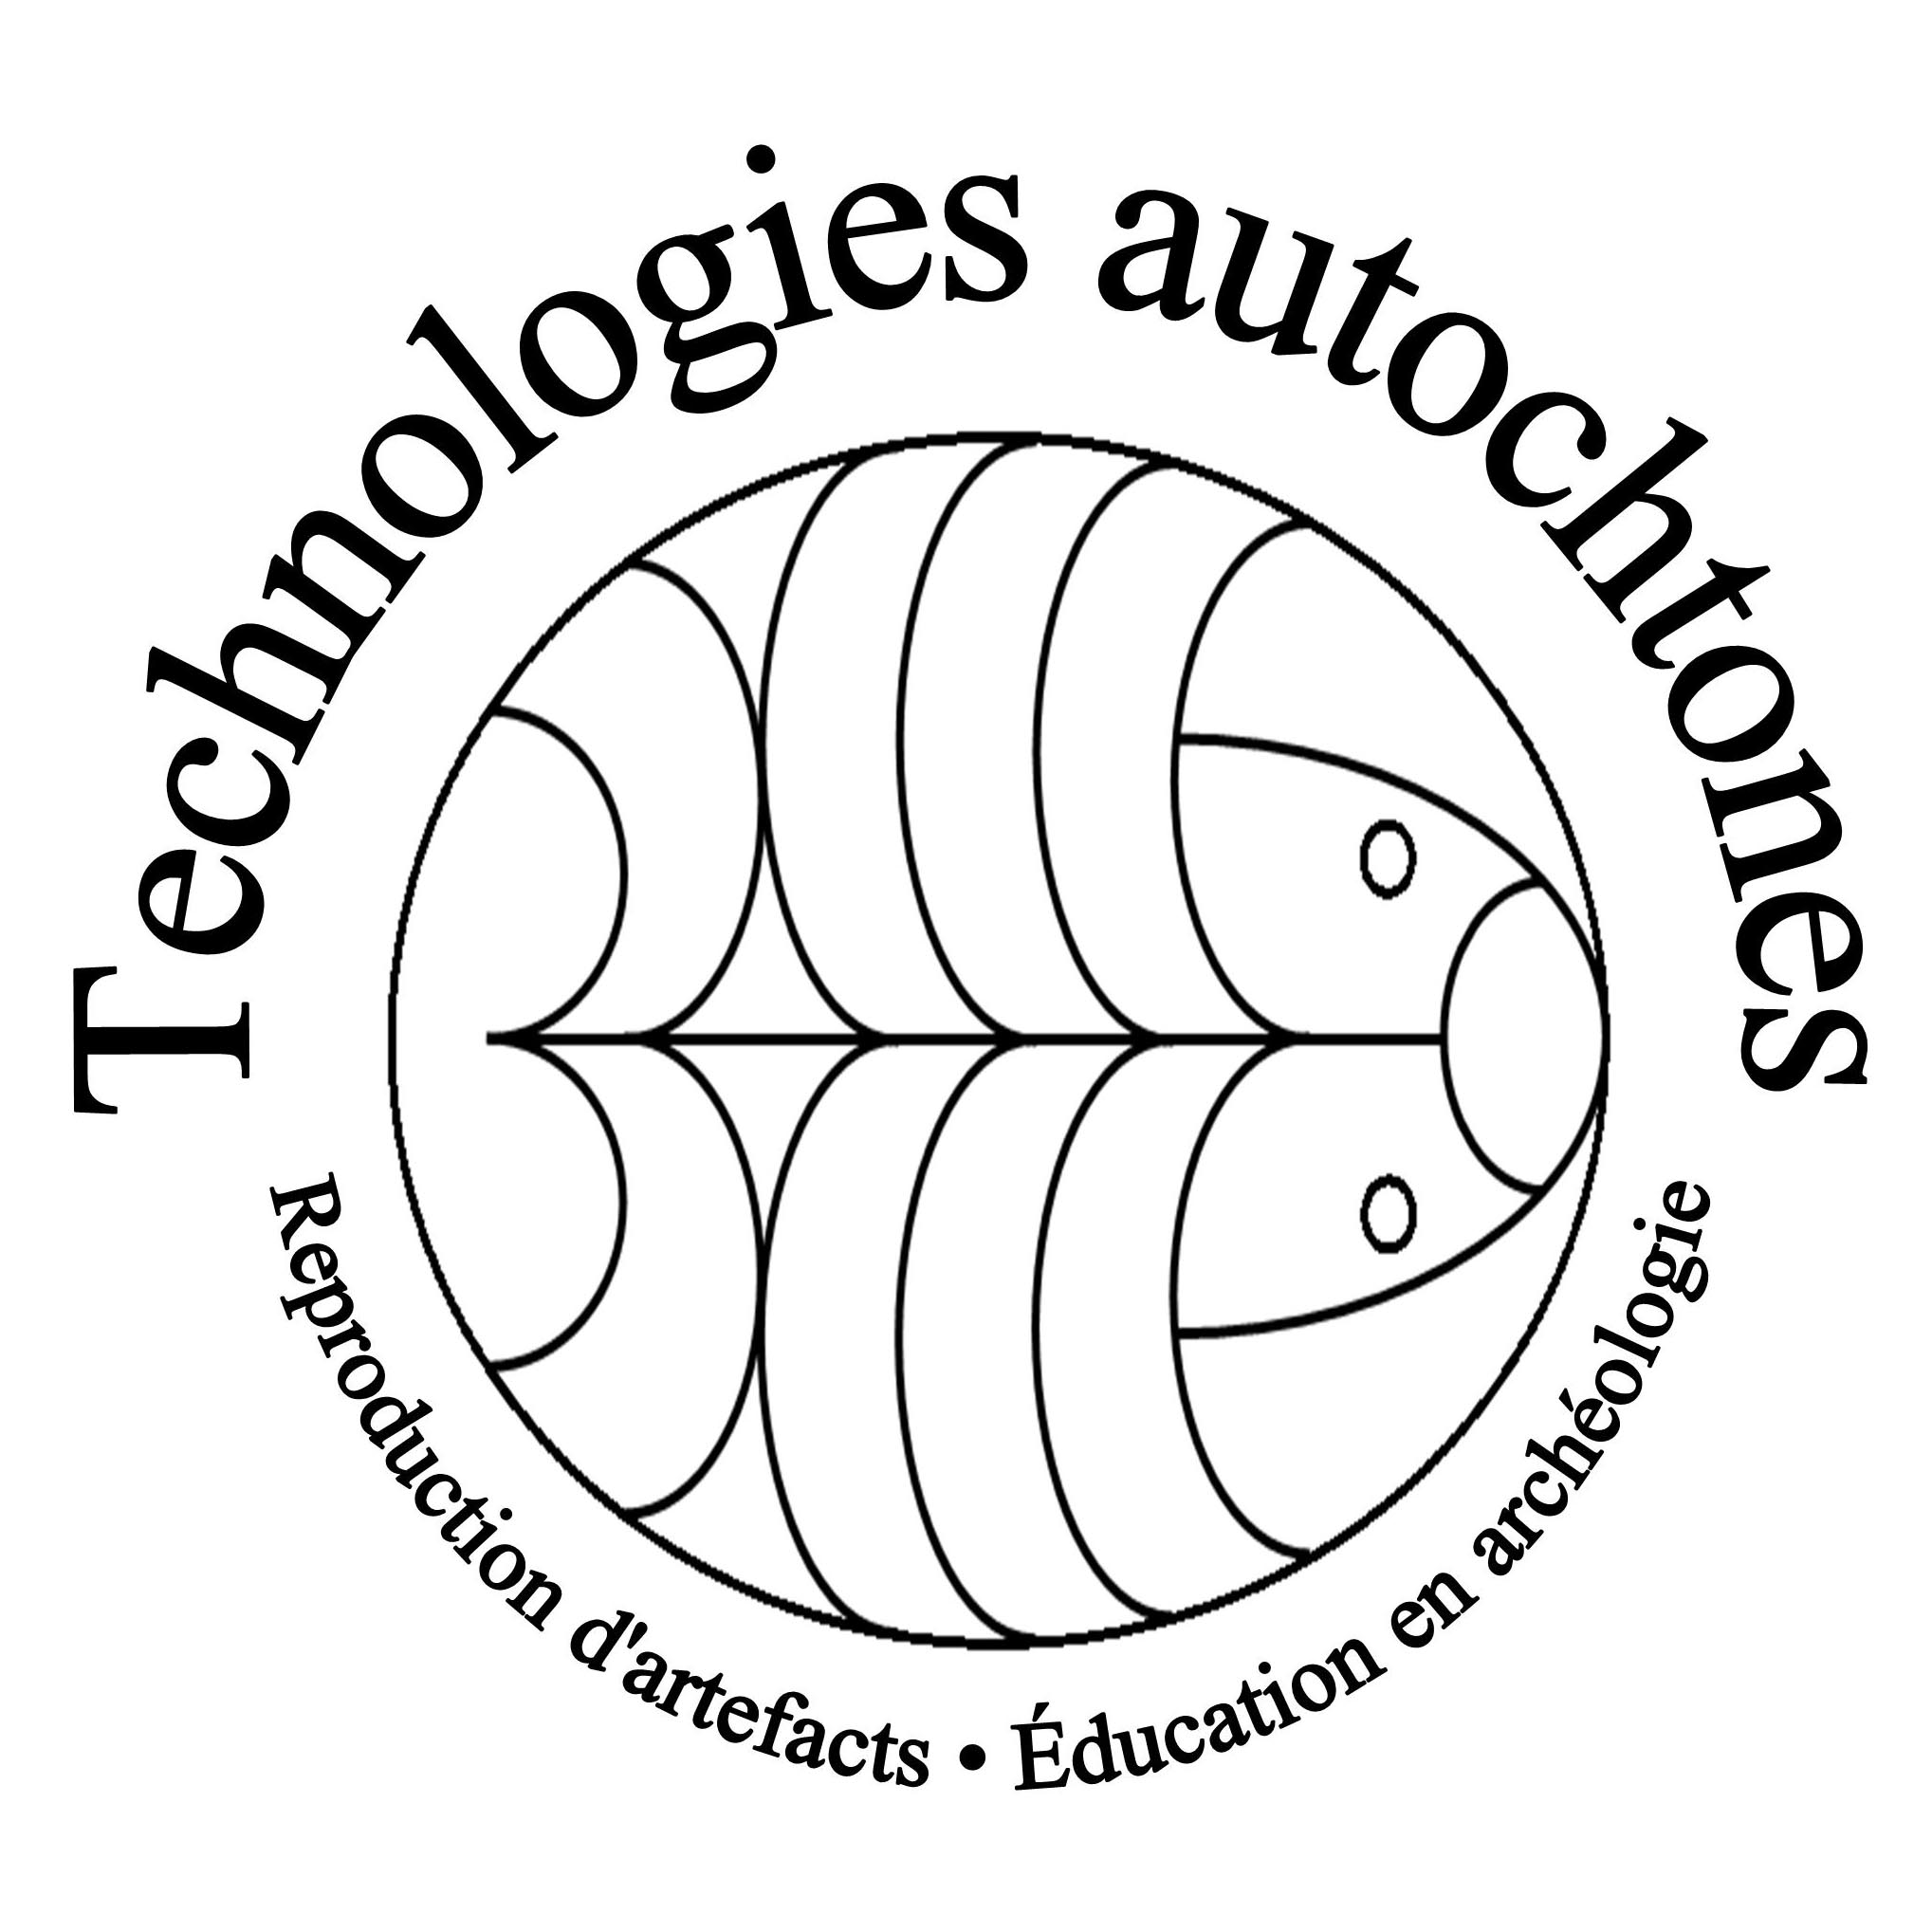 Technologies autochtones